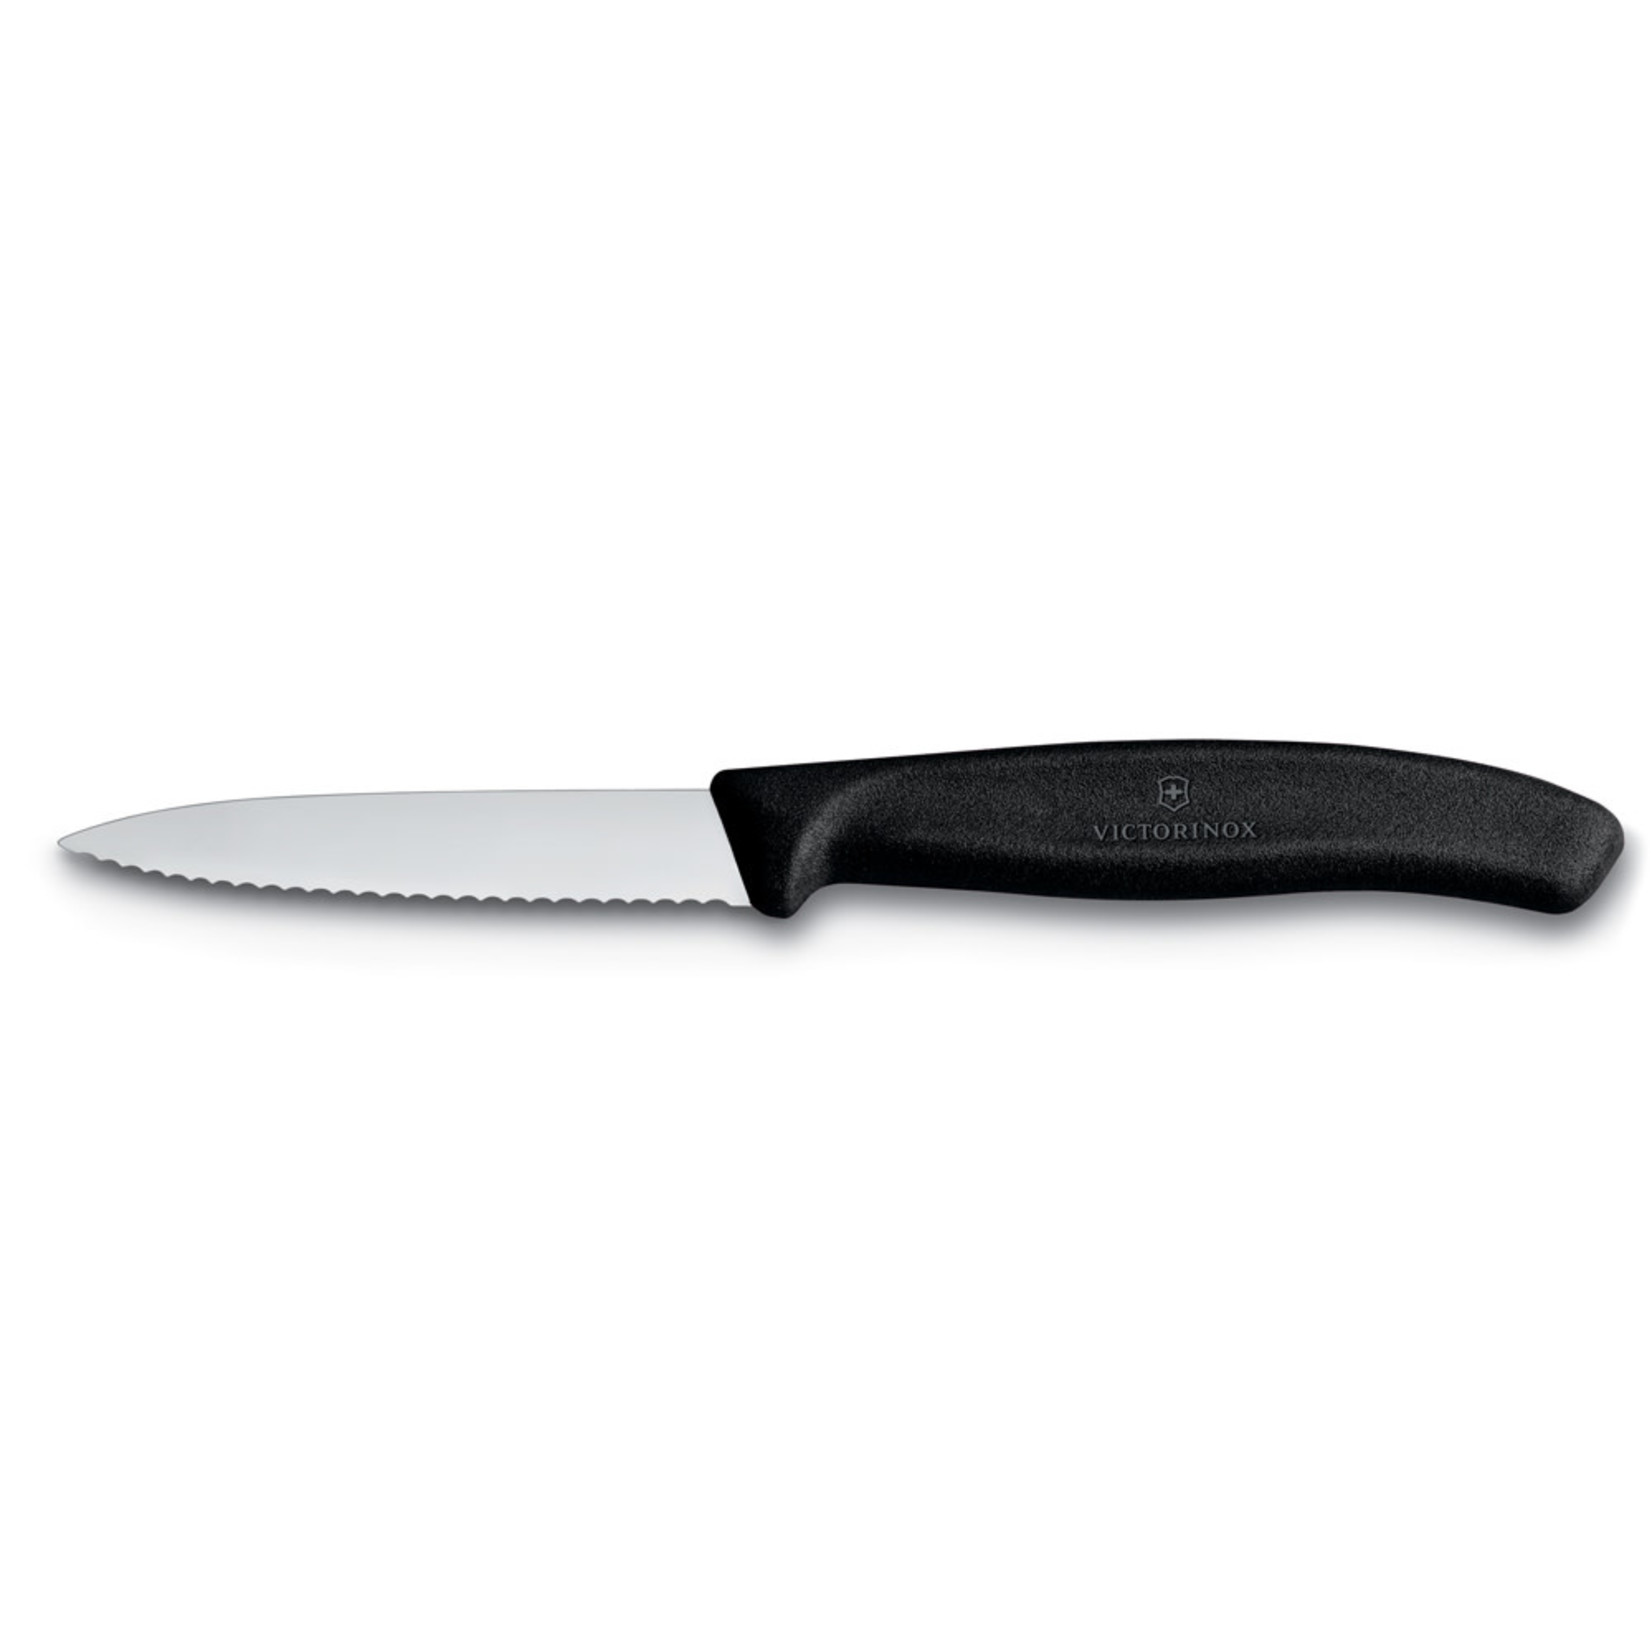 Victorinox Victorinox Scalloped 3.25" Paring Knife - Black